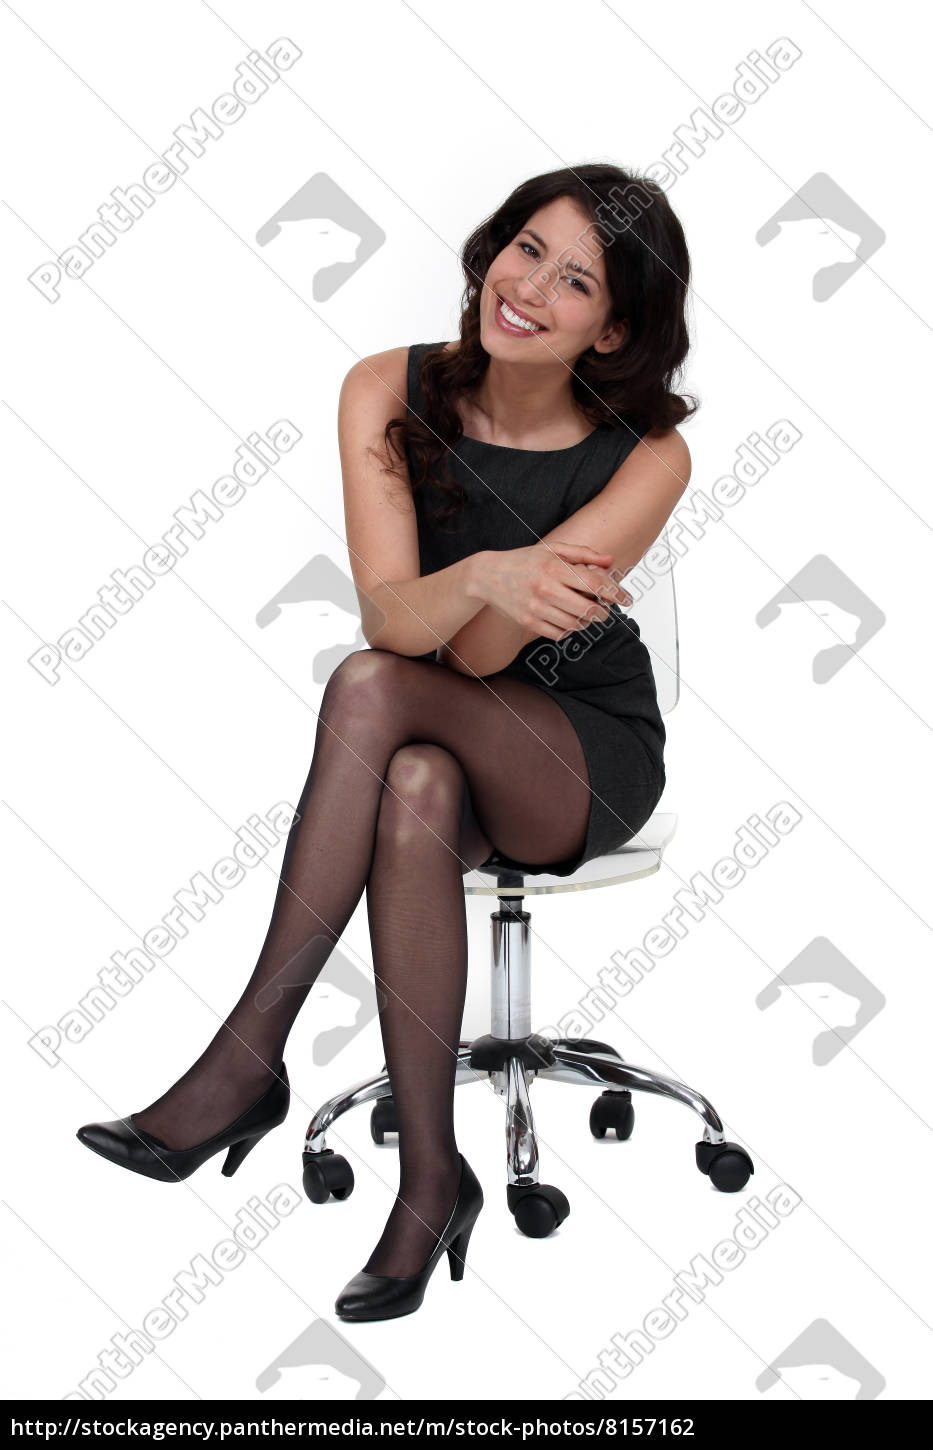 donna sexy seduta su una sedia - Stockphoto #8157162